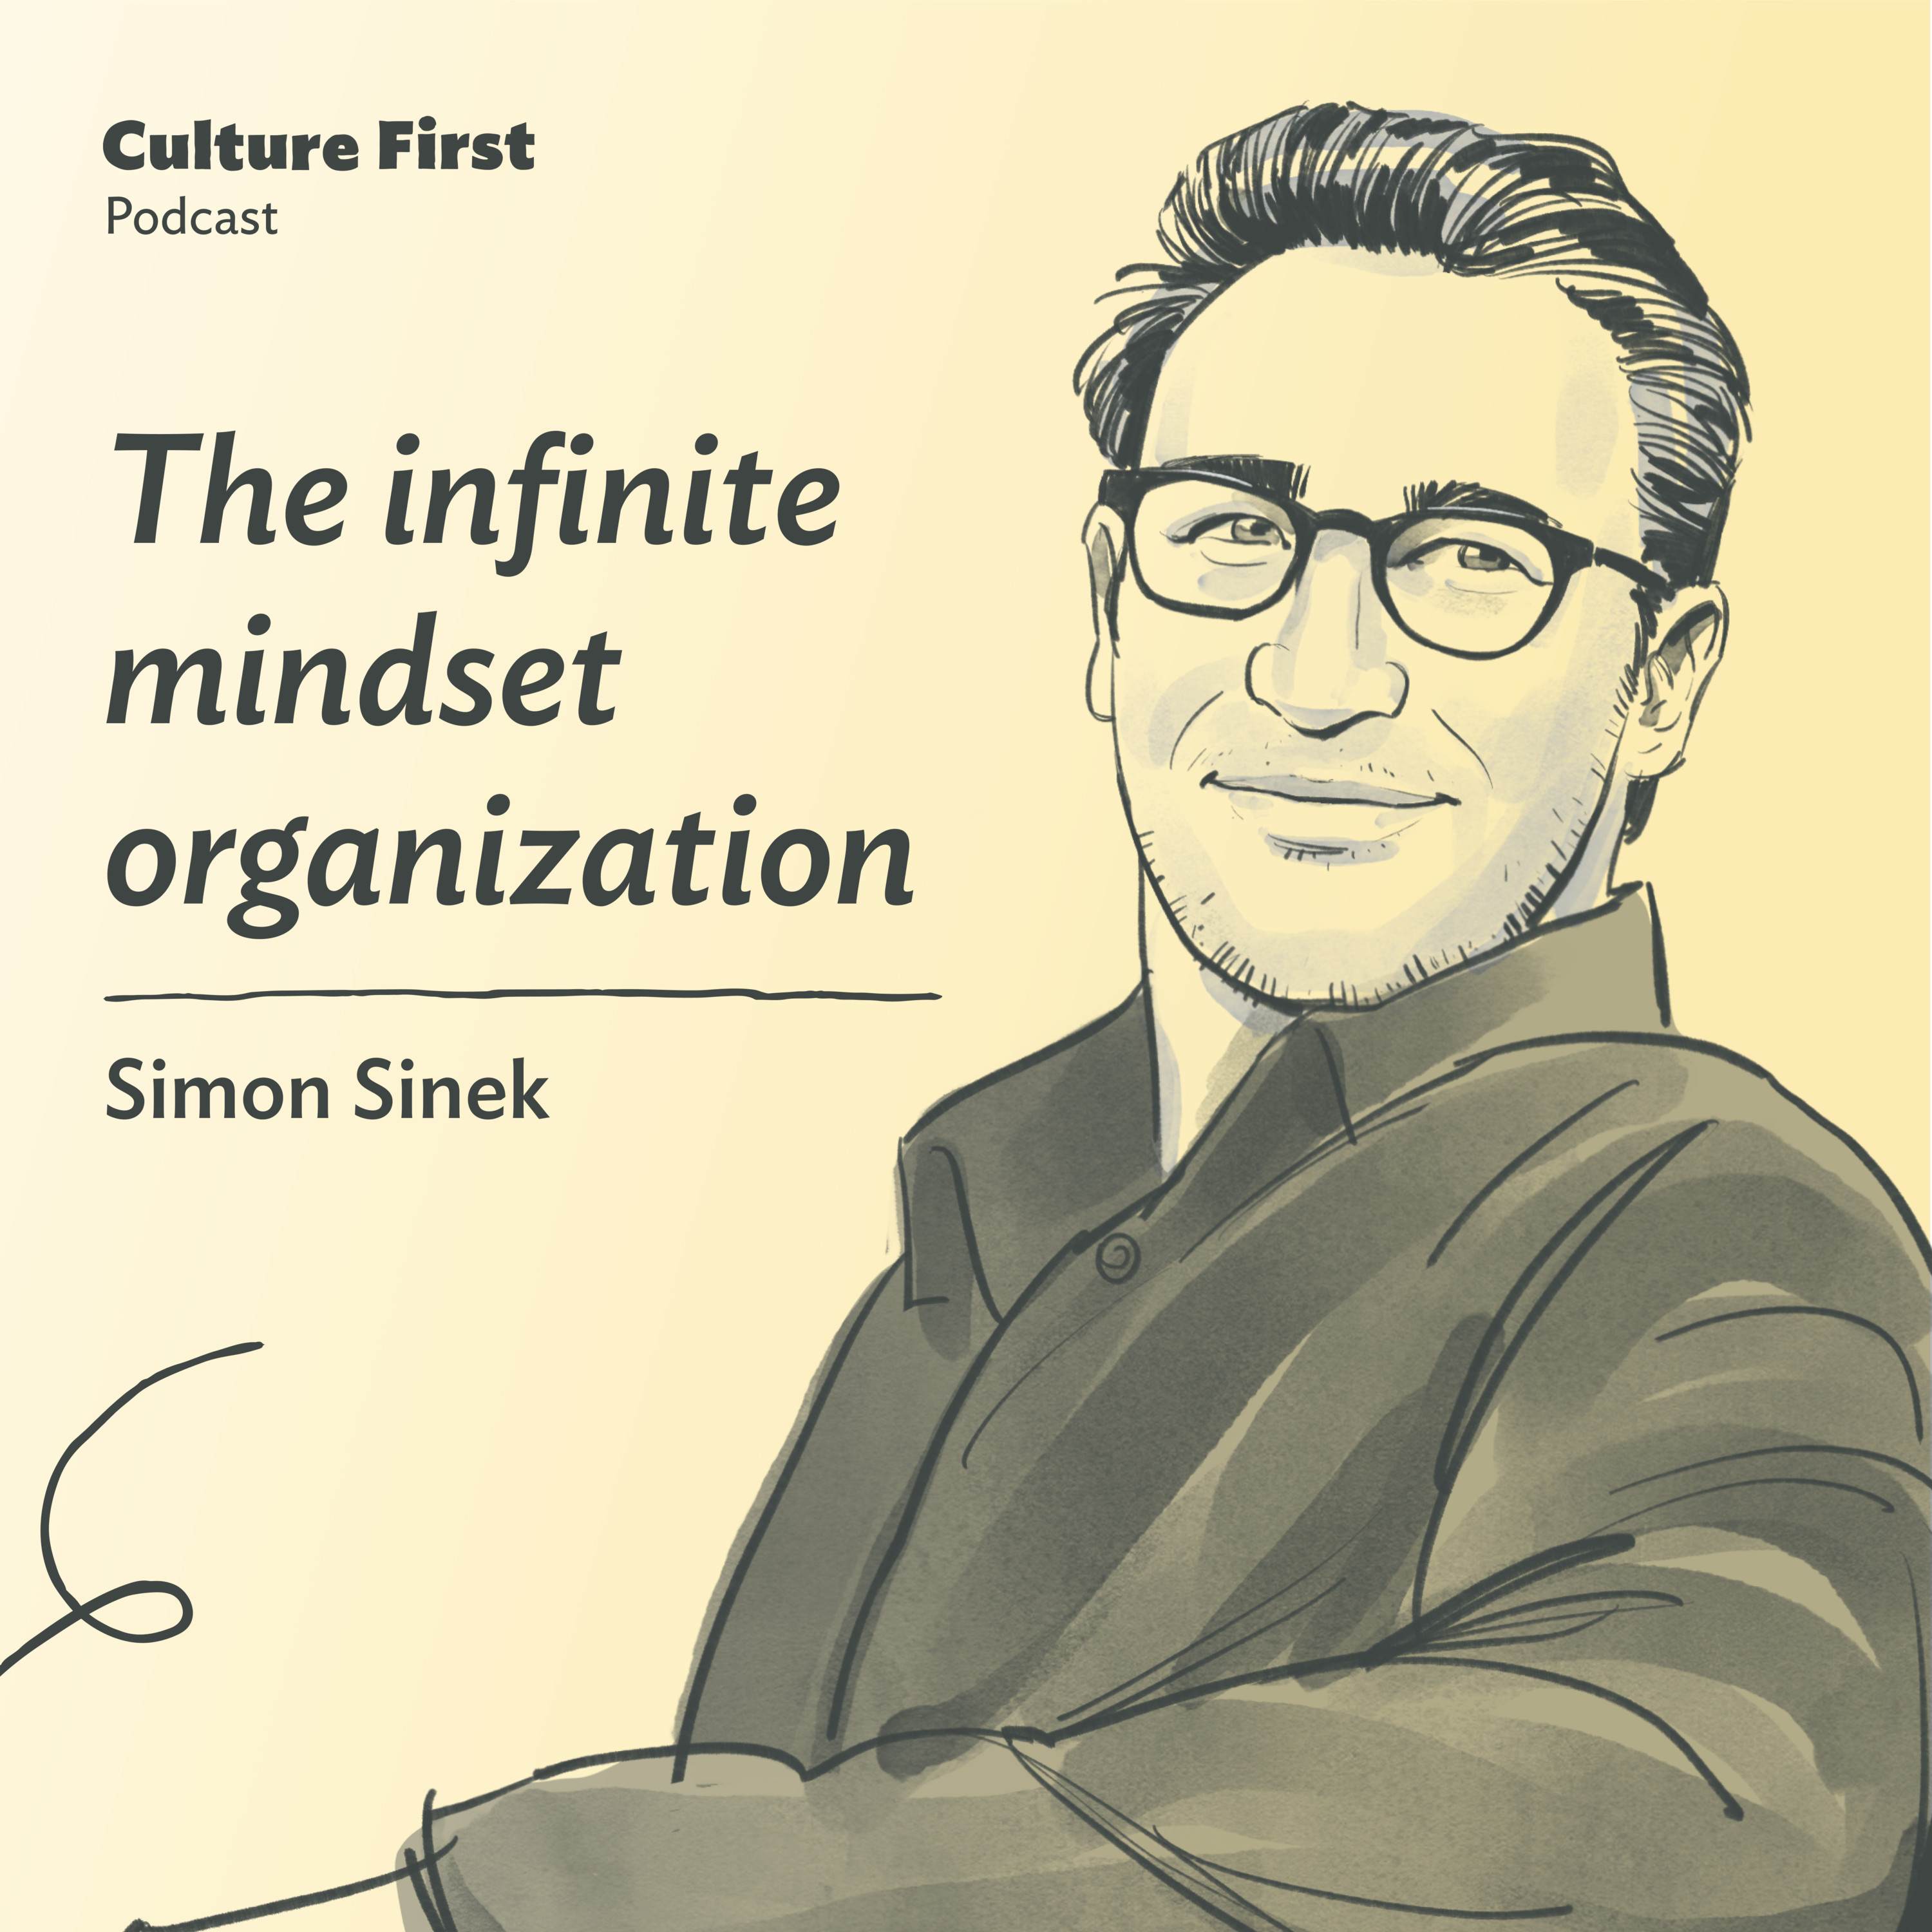 The infinite mindset organization, with Simon Sinek